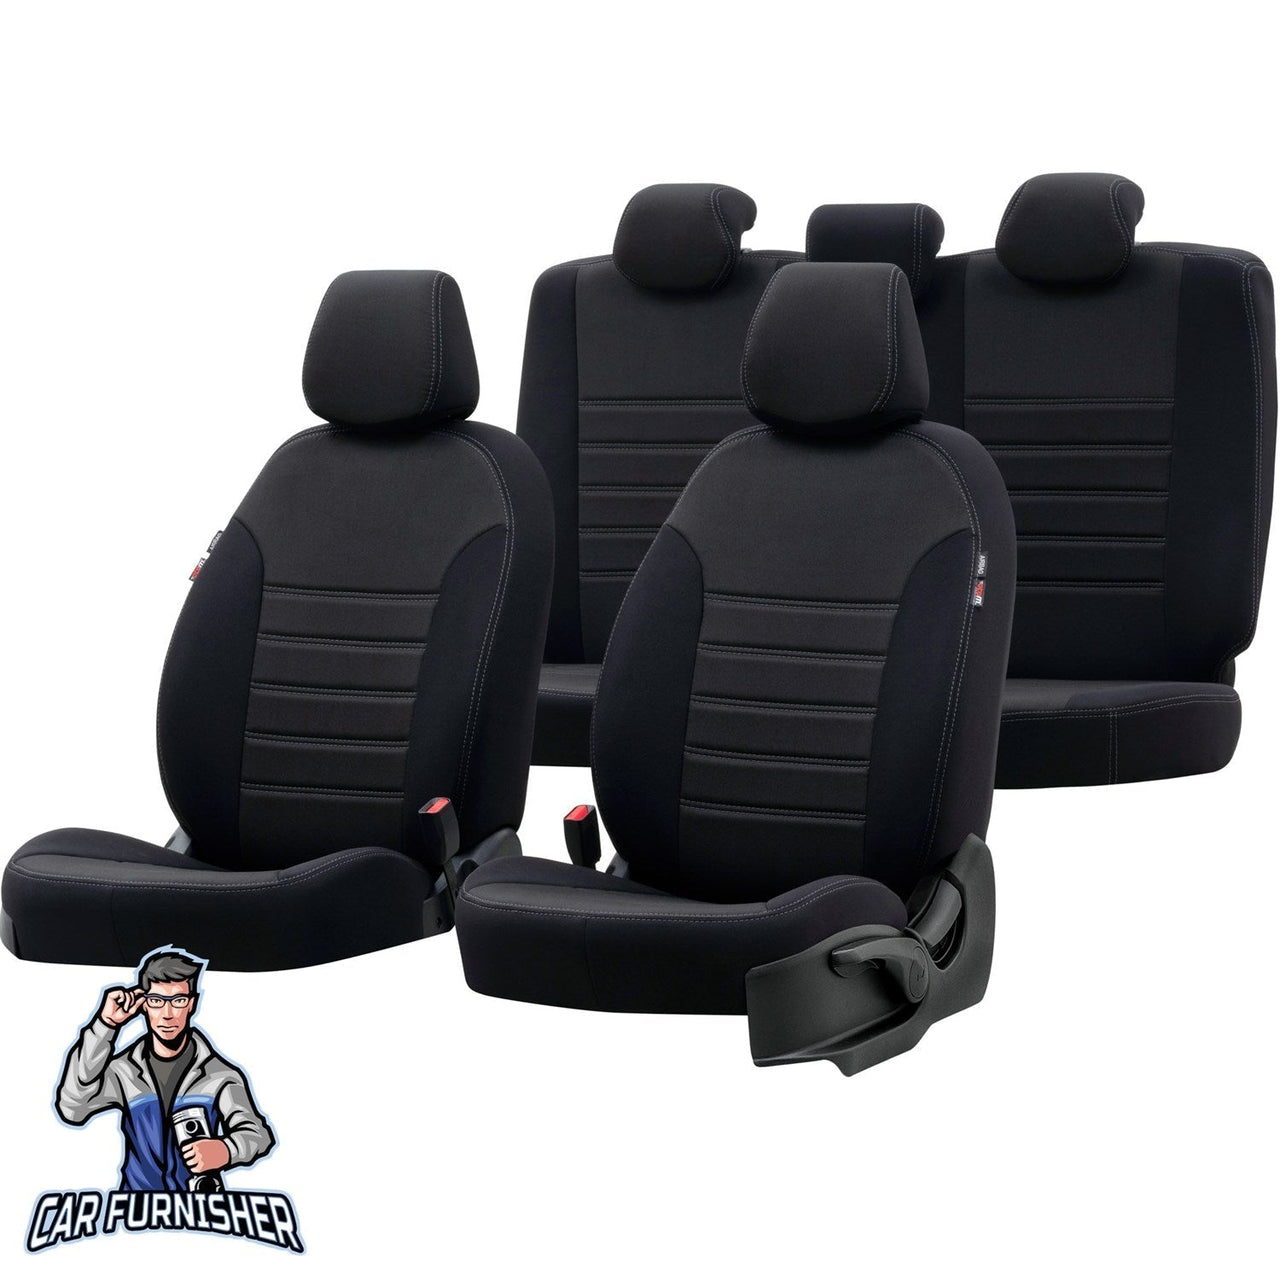 Dodge Nitro Seat Cover Original Jacquard Design Black Jacquard Fabric